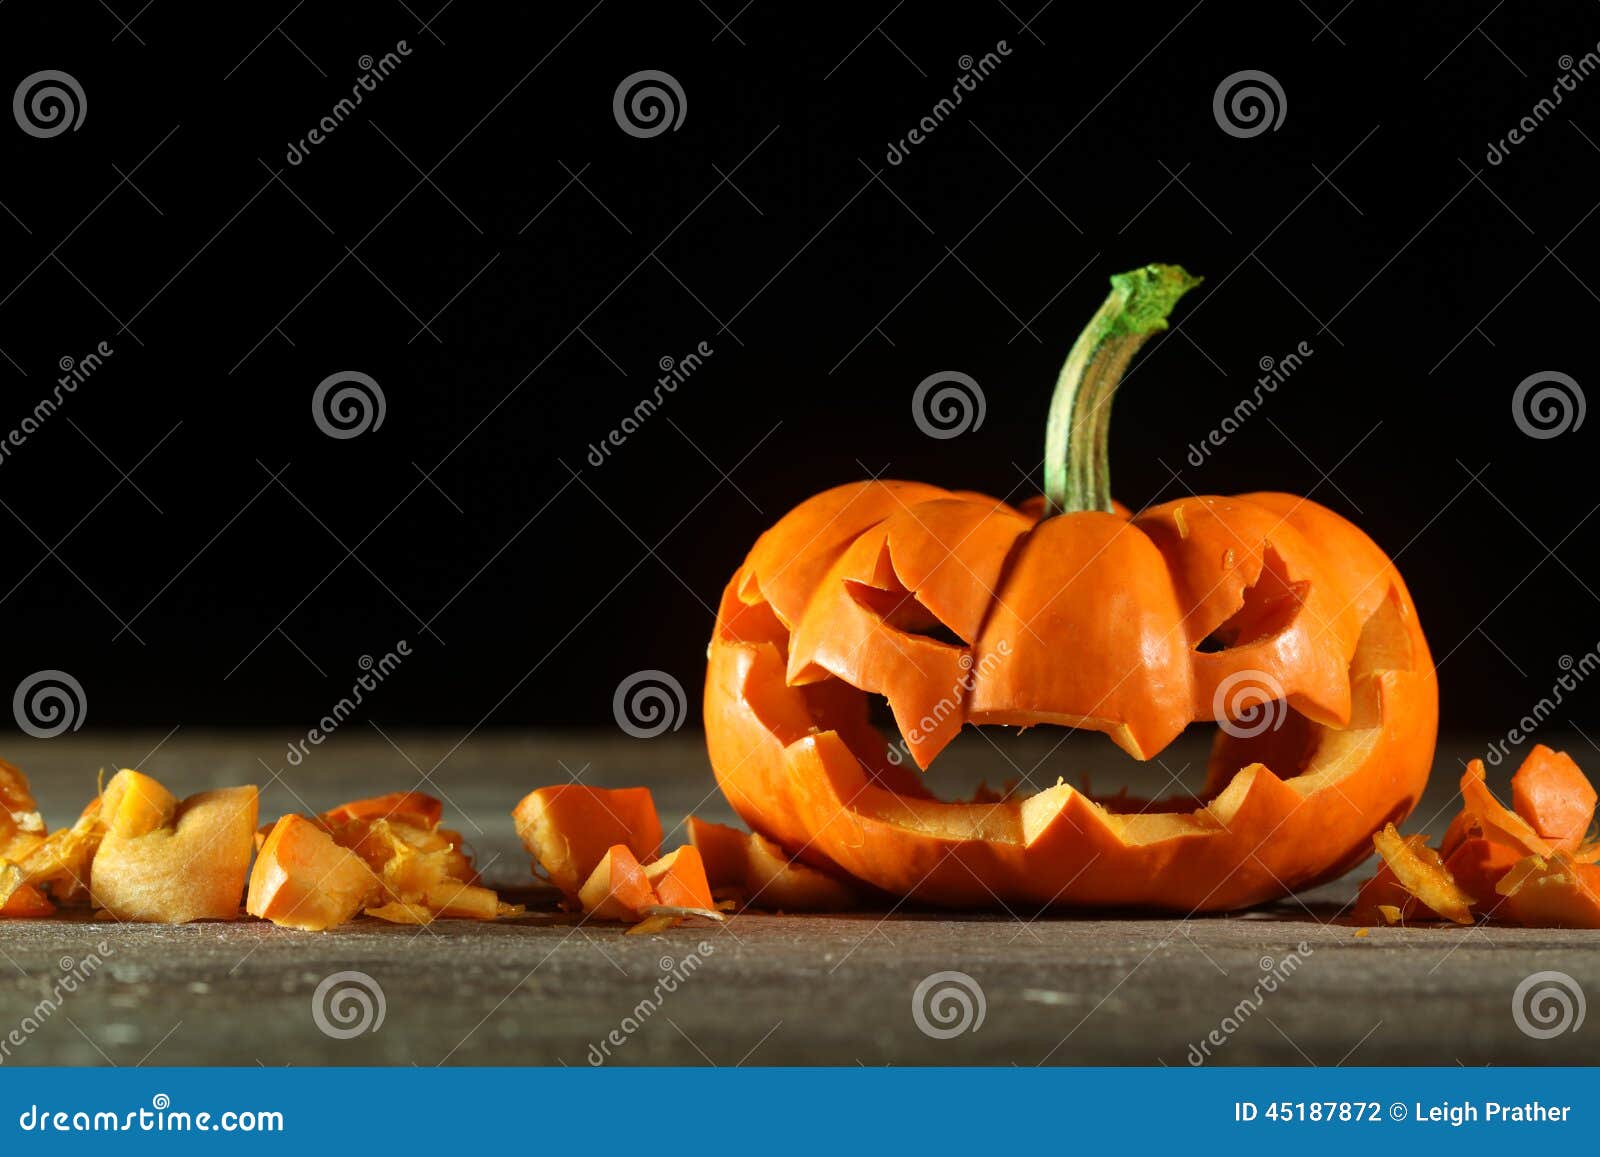 Carved jack o lantern stock photo. Image of scary, carved - 45187872